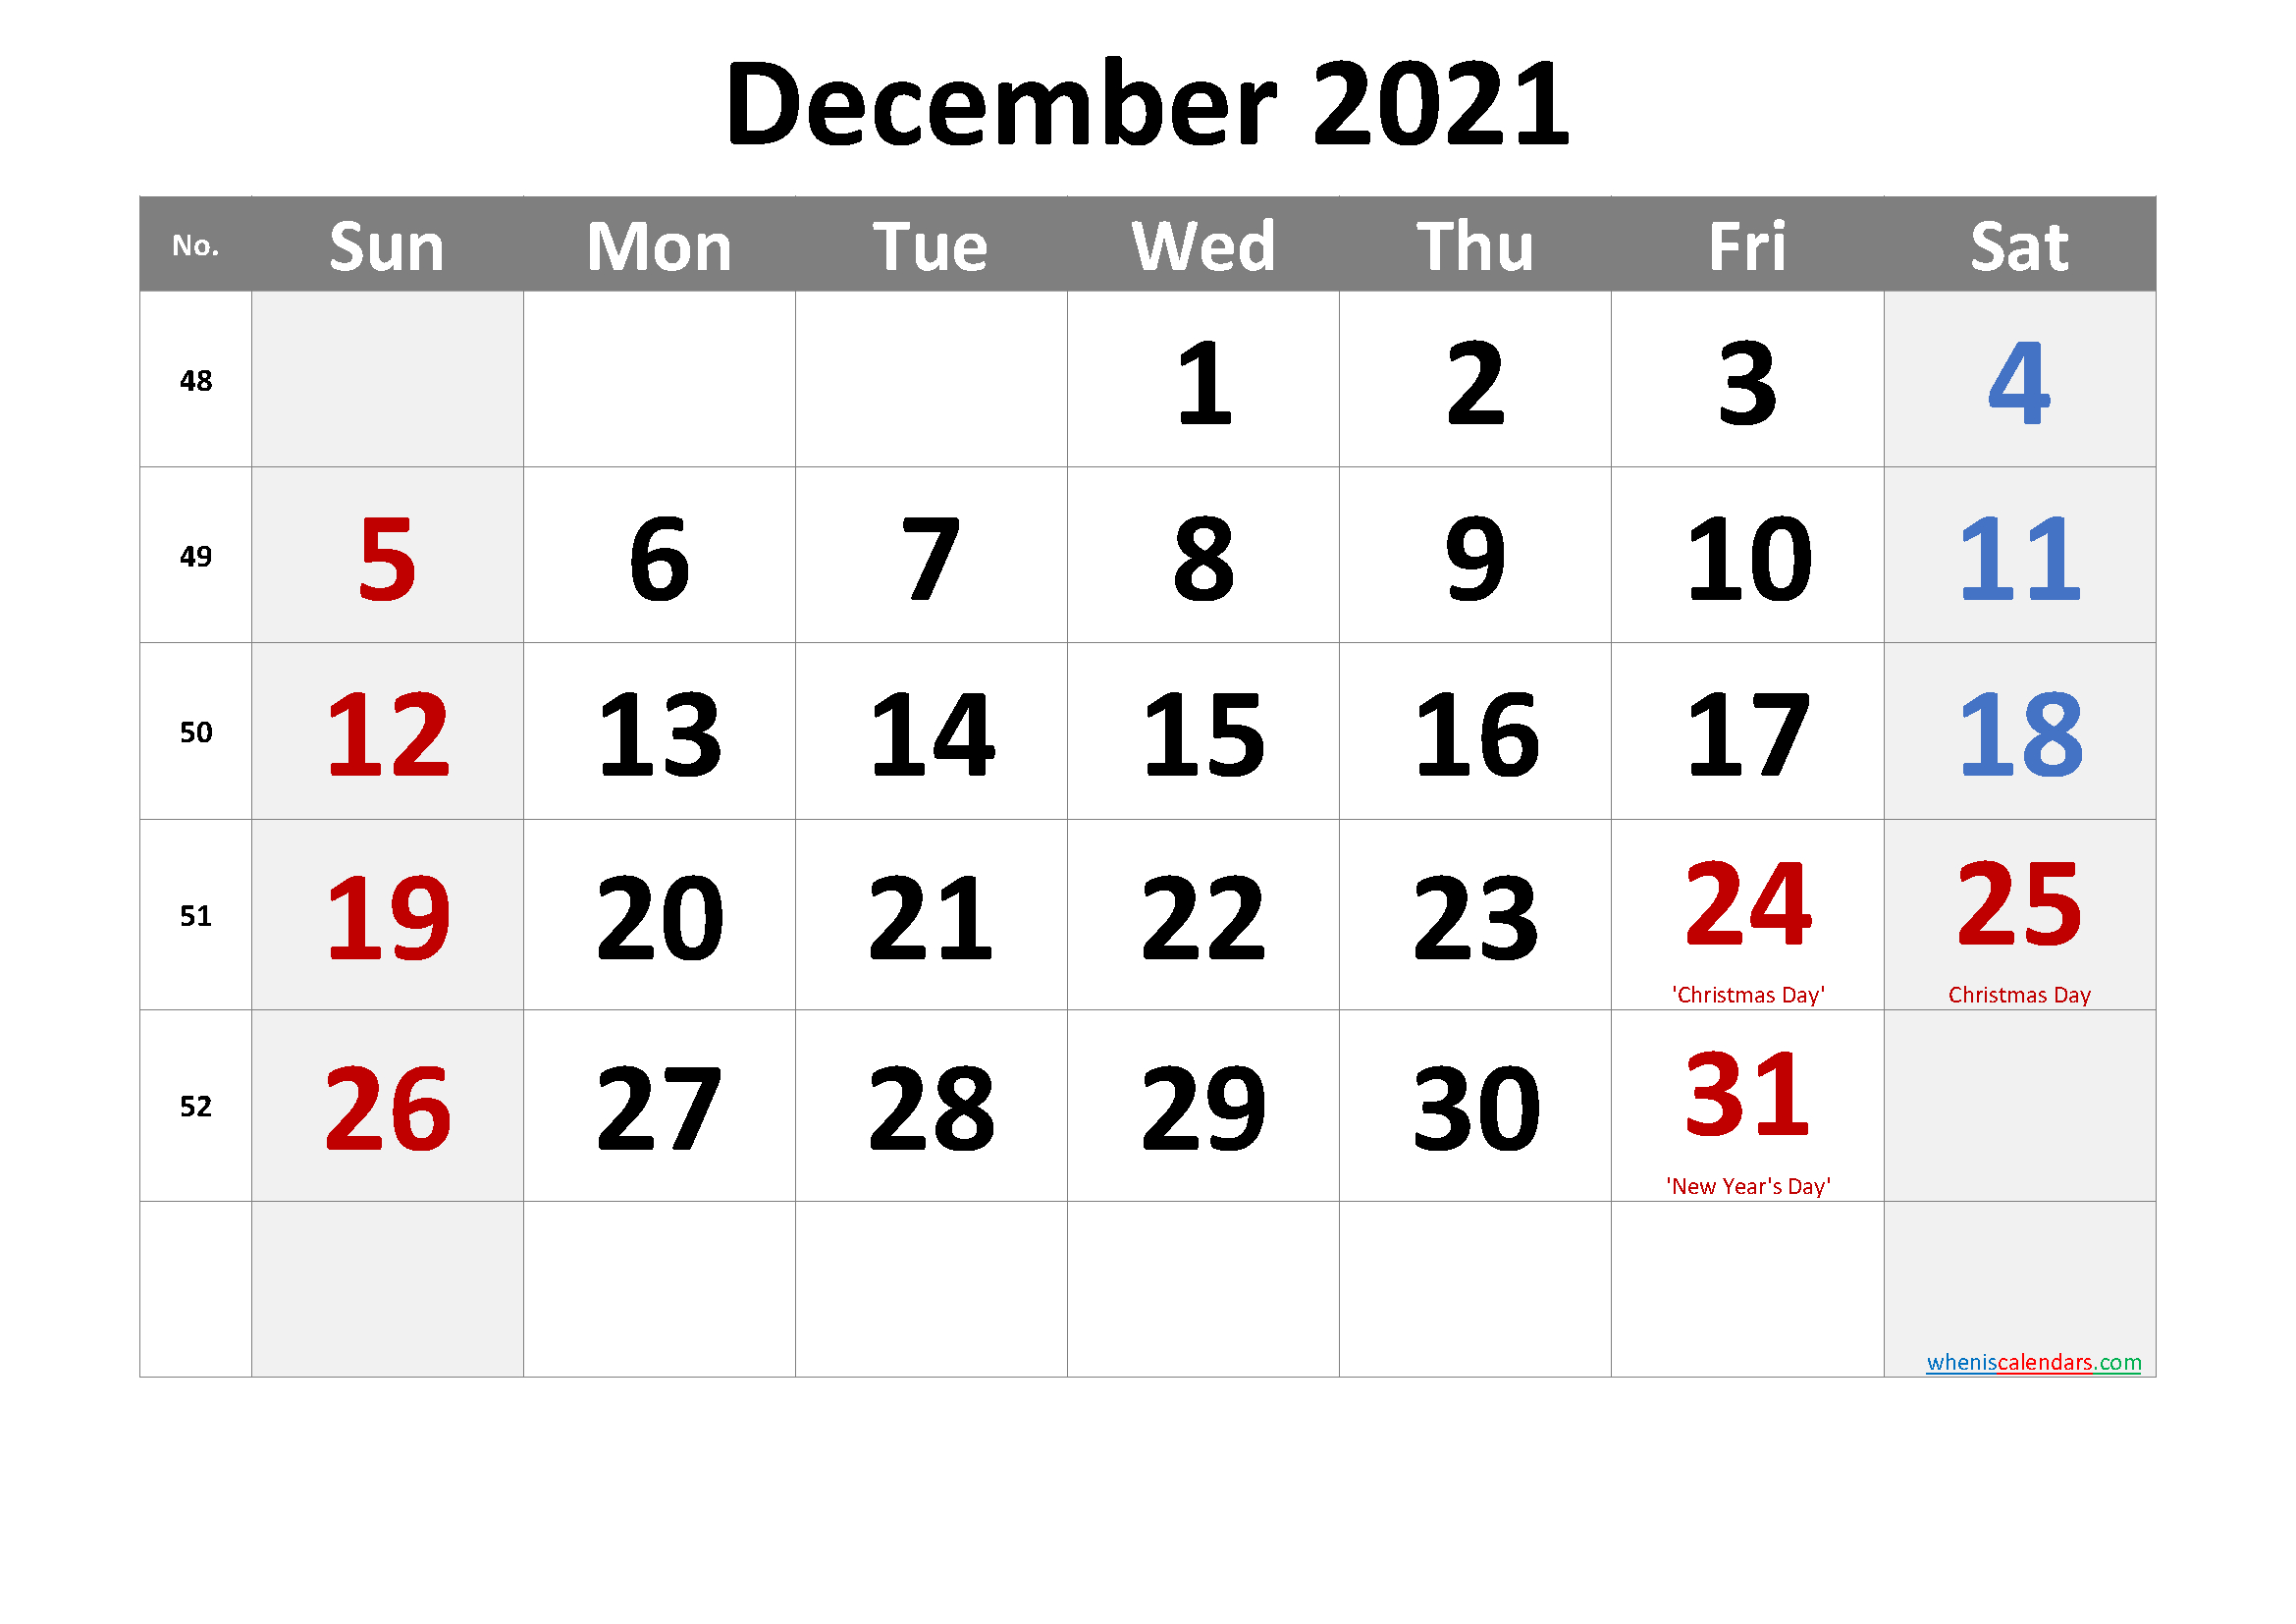 December 2021 Printable Calendar With Holidays - 6 Templates 2021 Monthly Calendar January To December 2021 Calendar Printable